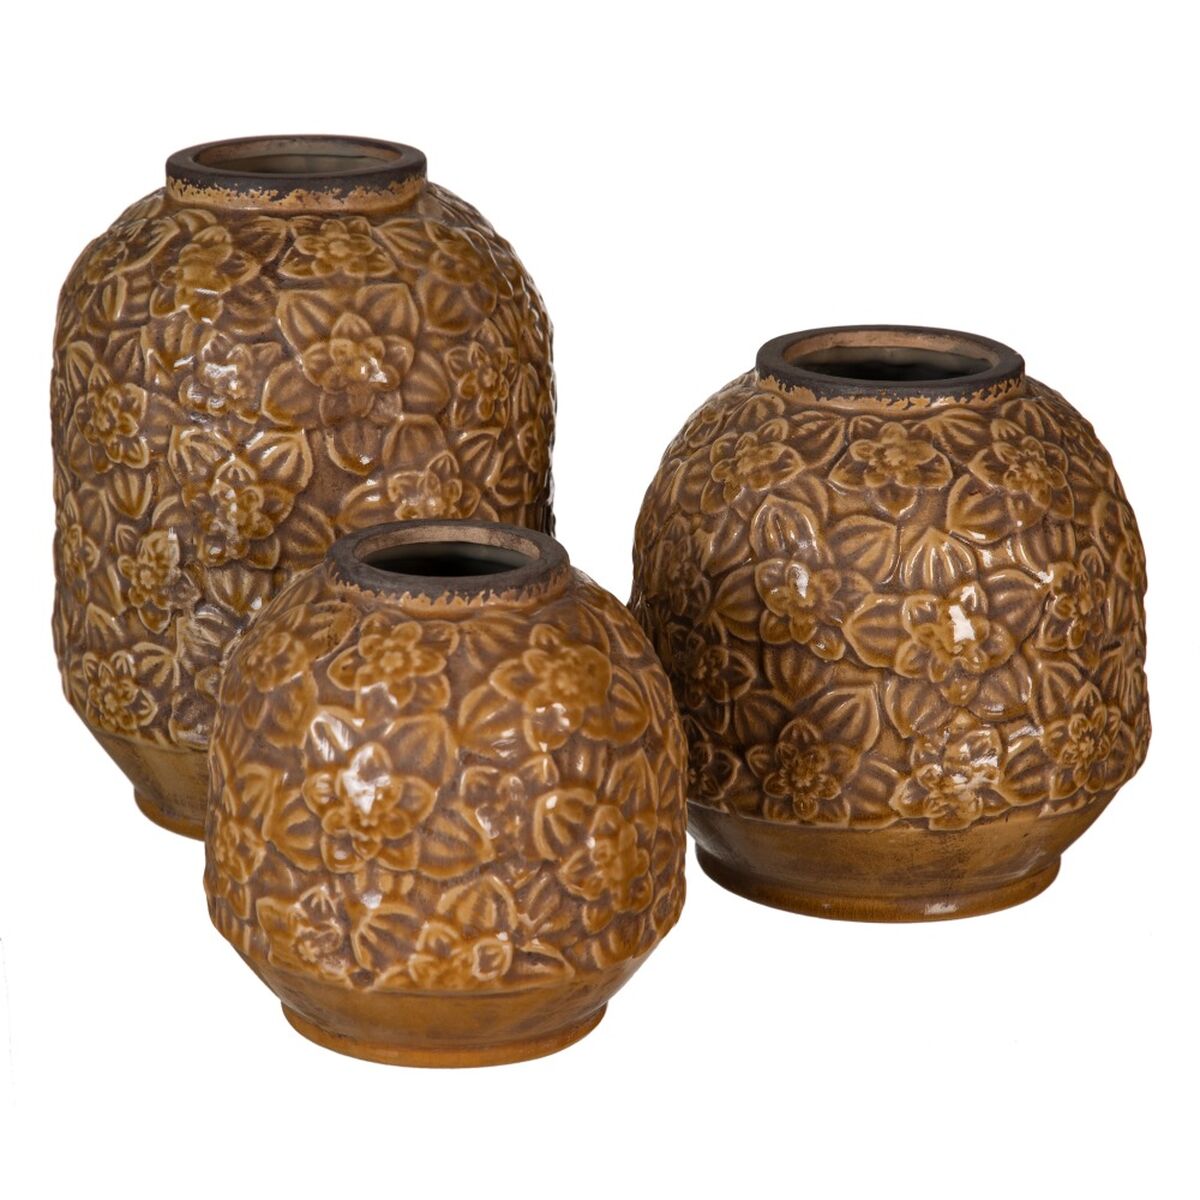 Vase Ceramic Brown 20 x 20 x 20 cm